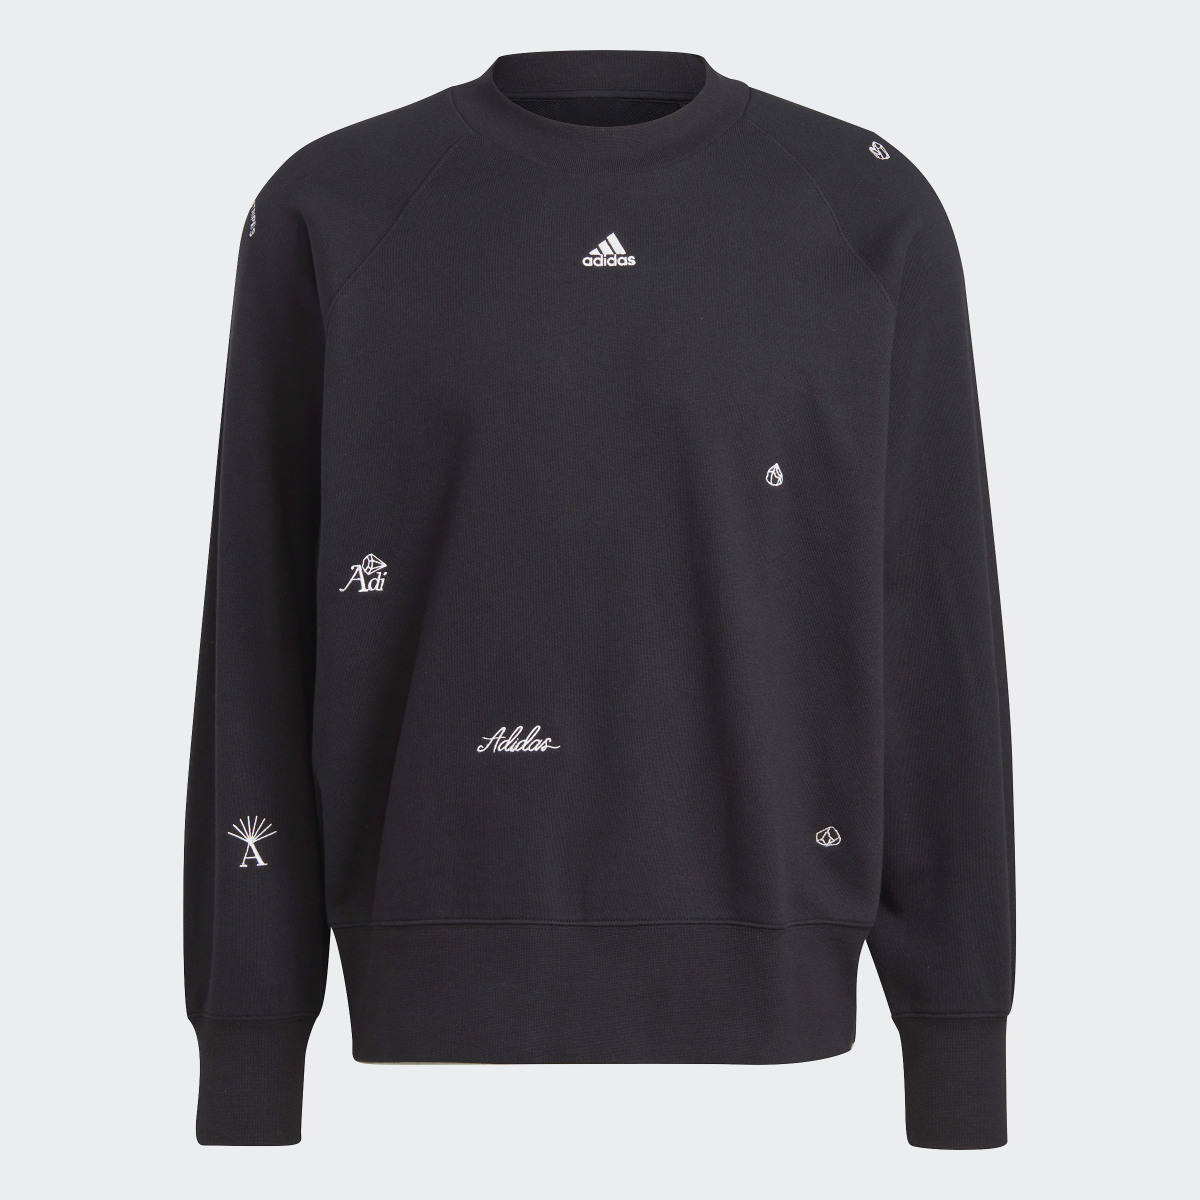 Adidas Sweatshirt Oversize Healing Crystals. 5